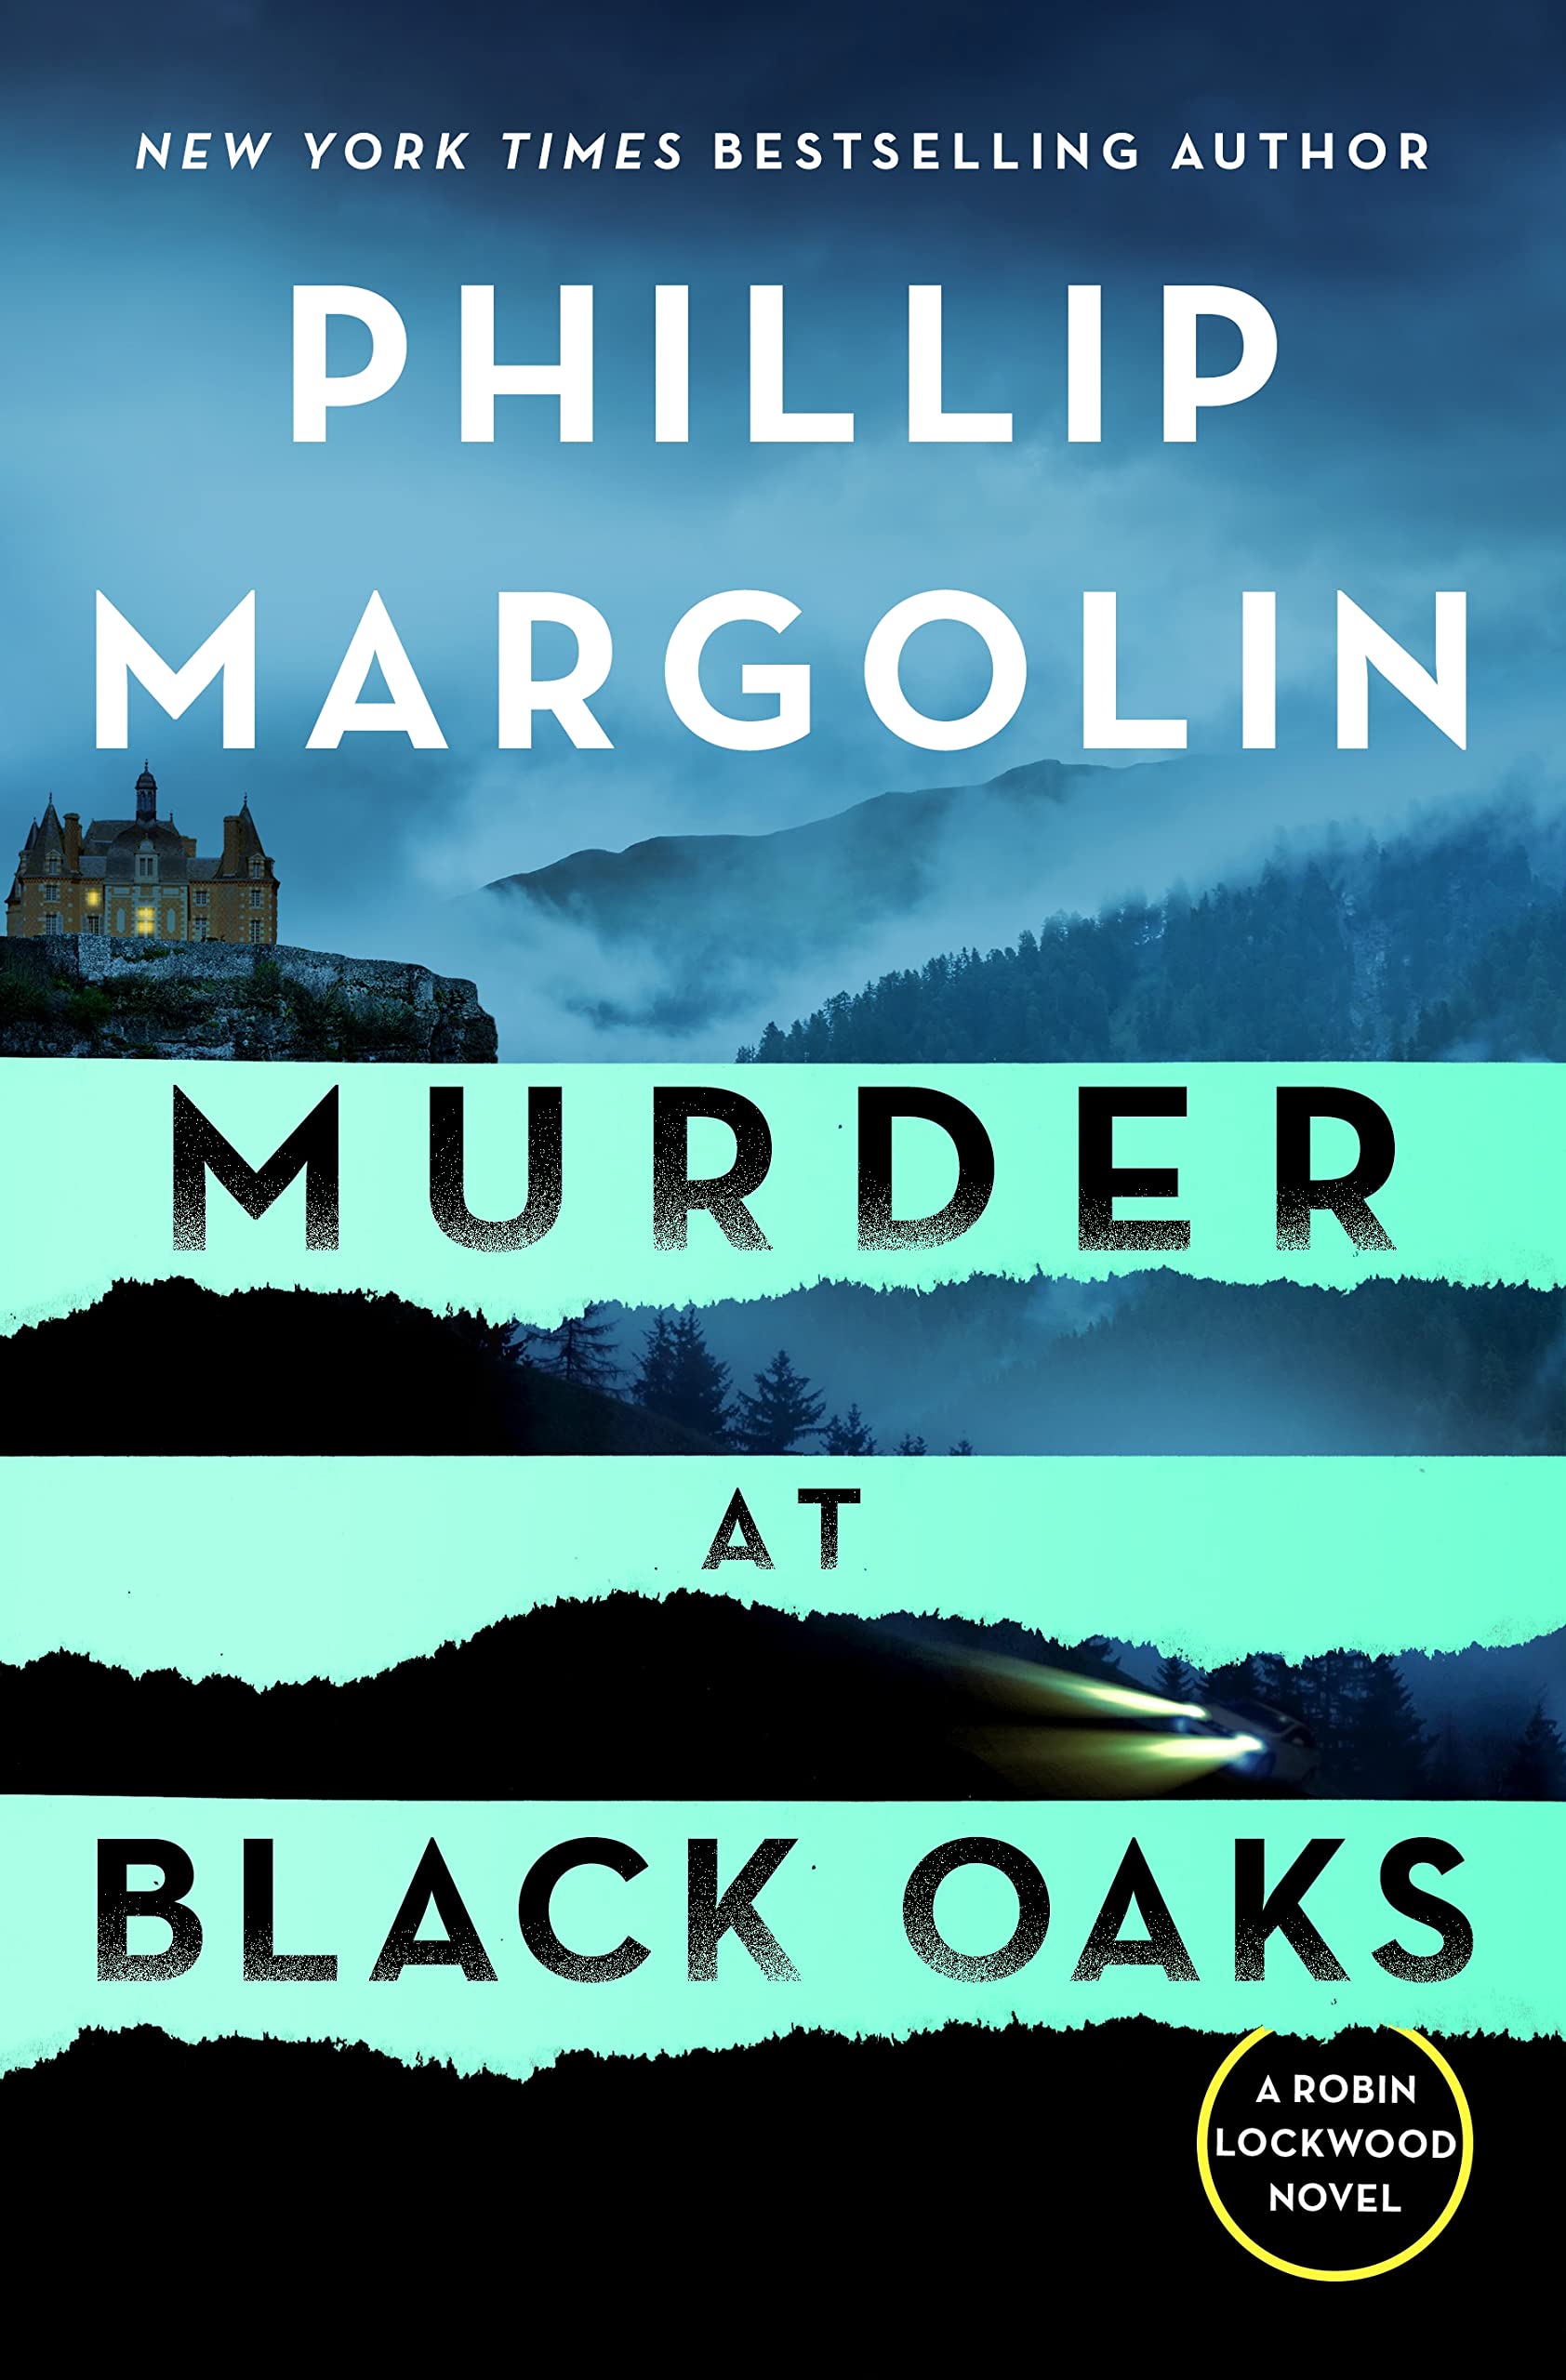 Image for "Murder at Black Oaks"